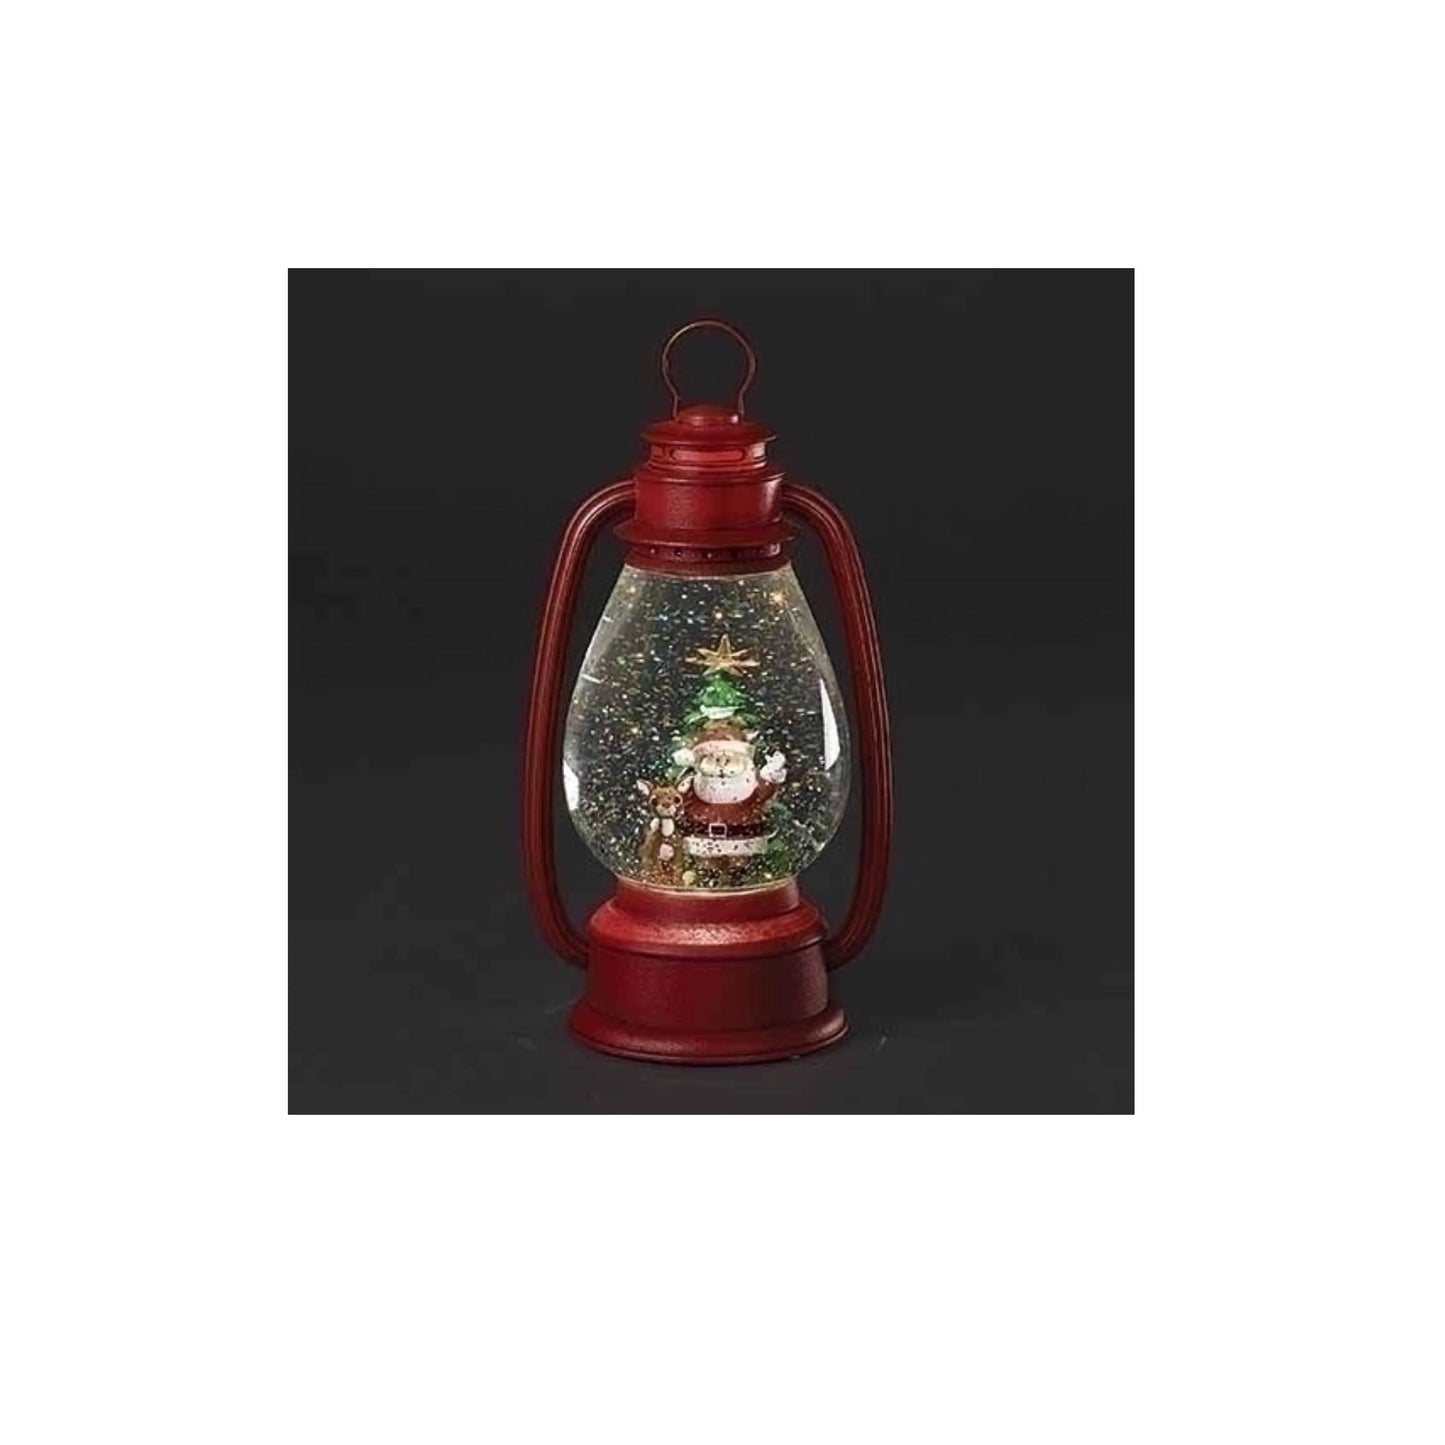 Rudolph With Santa LED Swirl Lantern Christmas by Roman